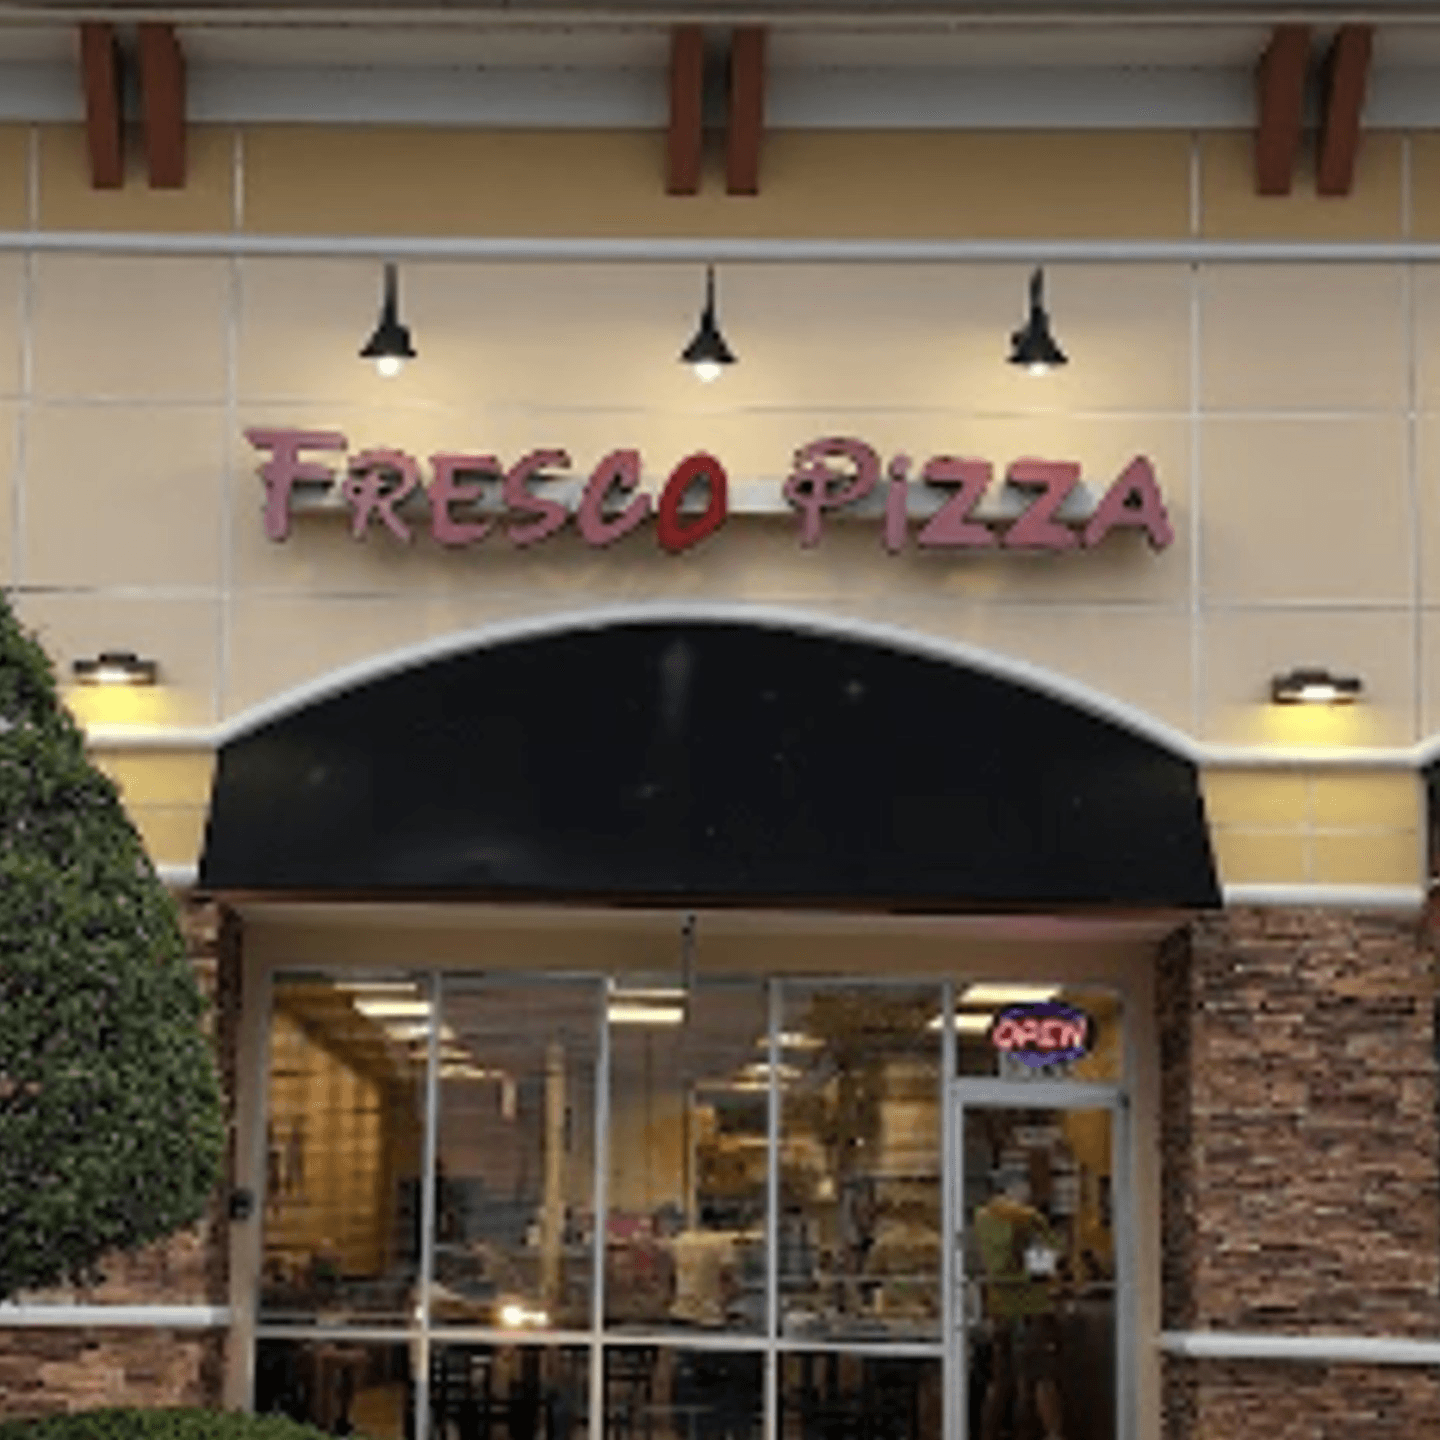 Fresco Pizza: A Lutz Culinary Landmark